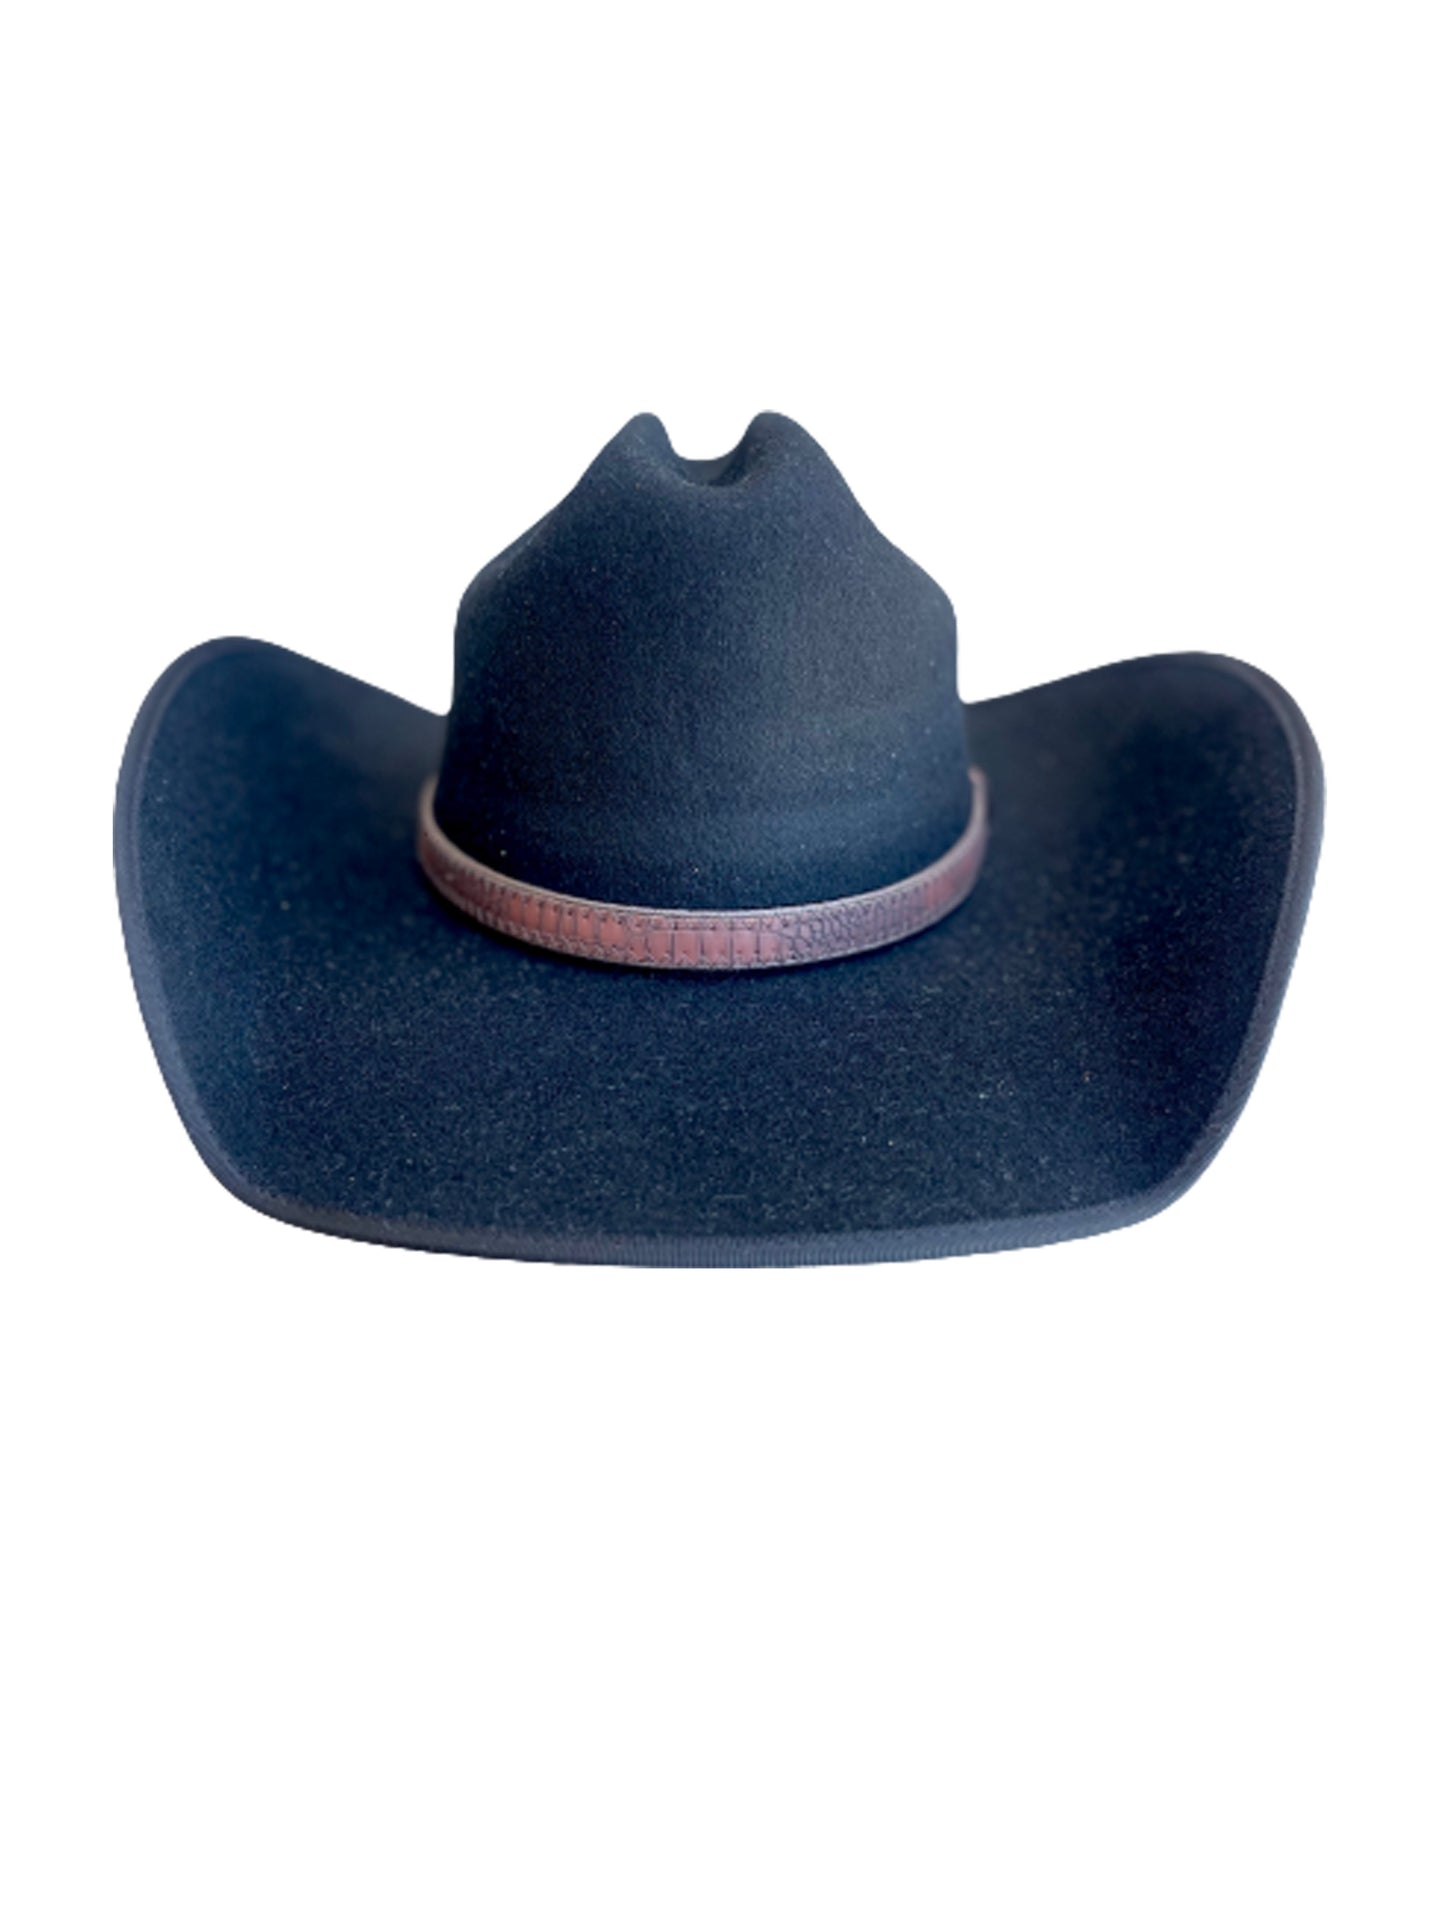 wool cowboy hat black